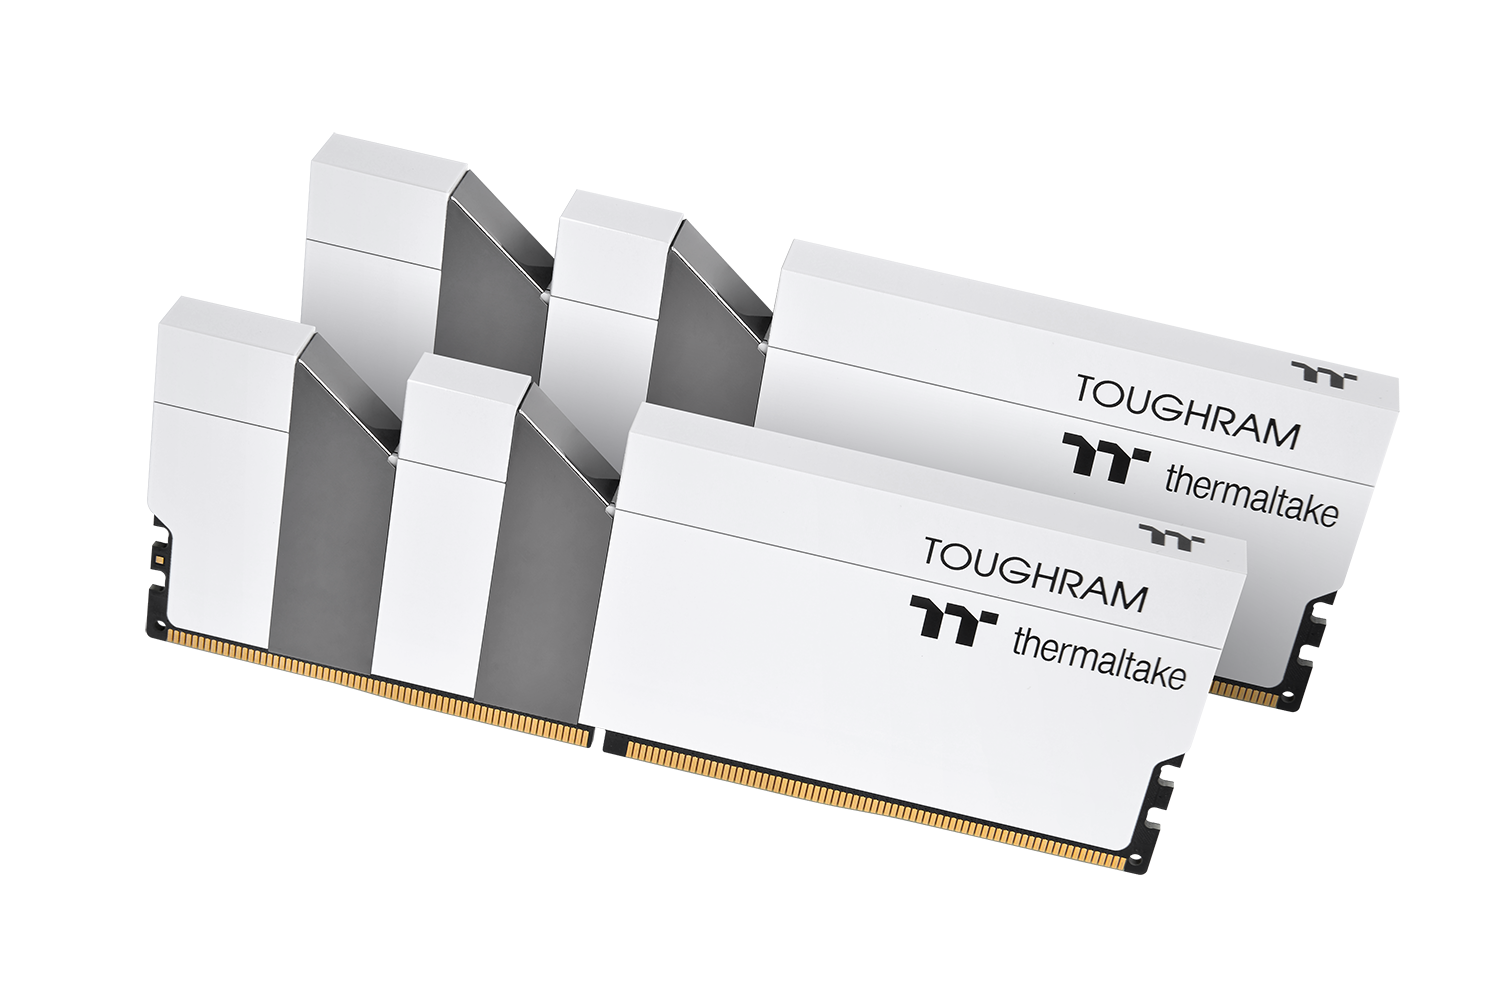 鋼影 TOUGHRAM 記憶體 DDR4 3600MHz 16GB (8GB x 2)白色